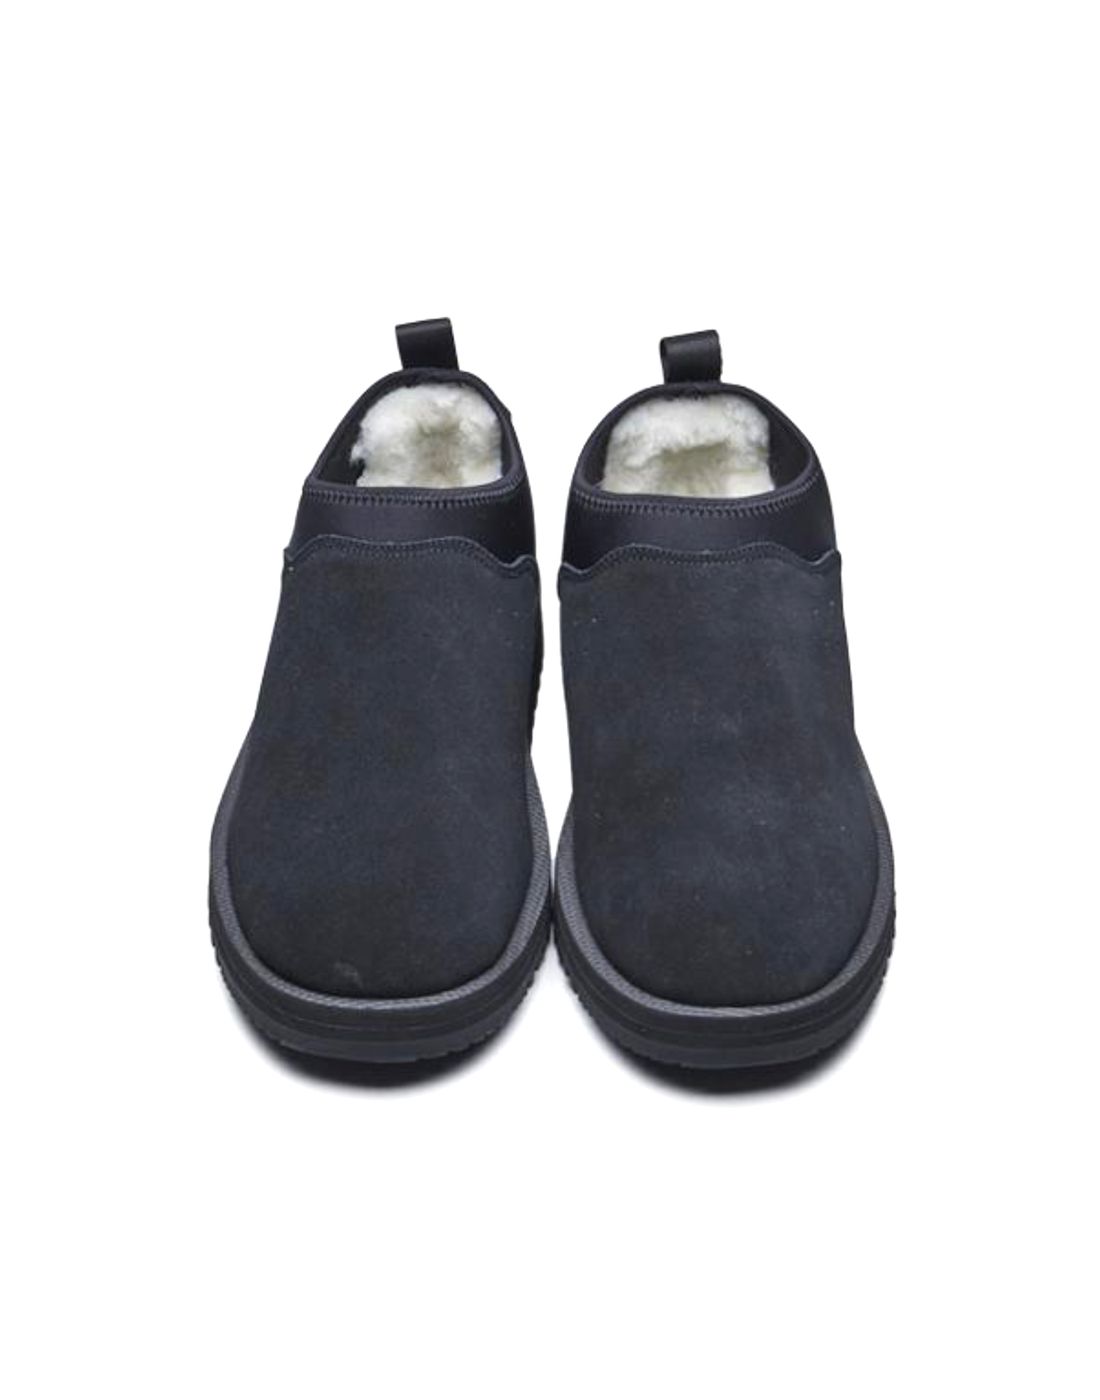 Shoes for women SUICOKE OG 073 MWPAB BLACK